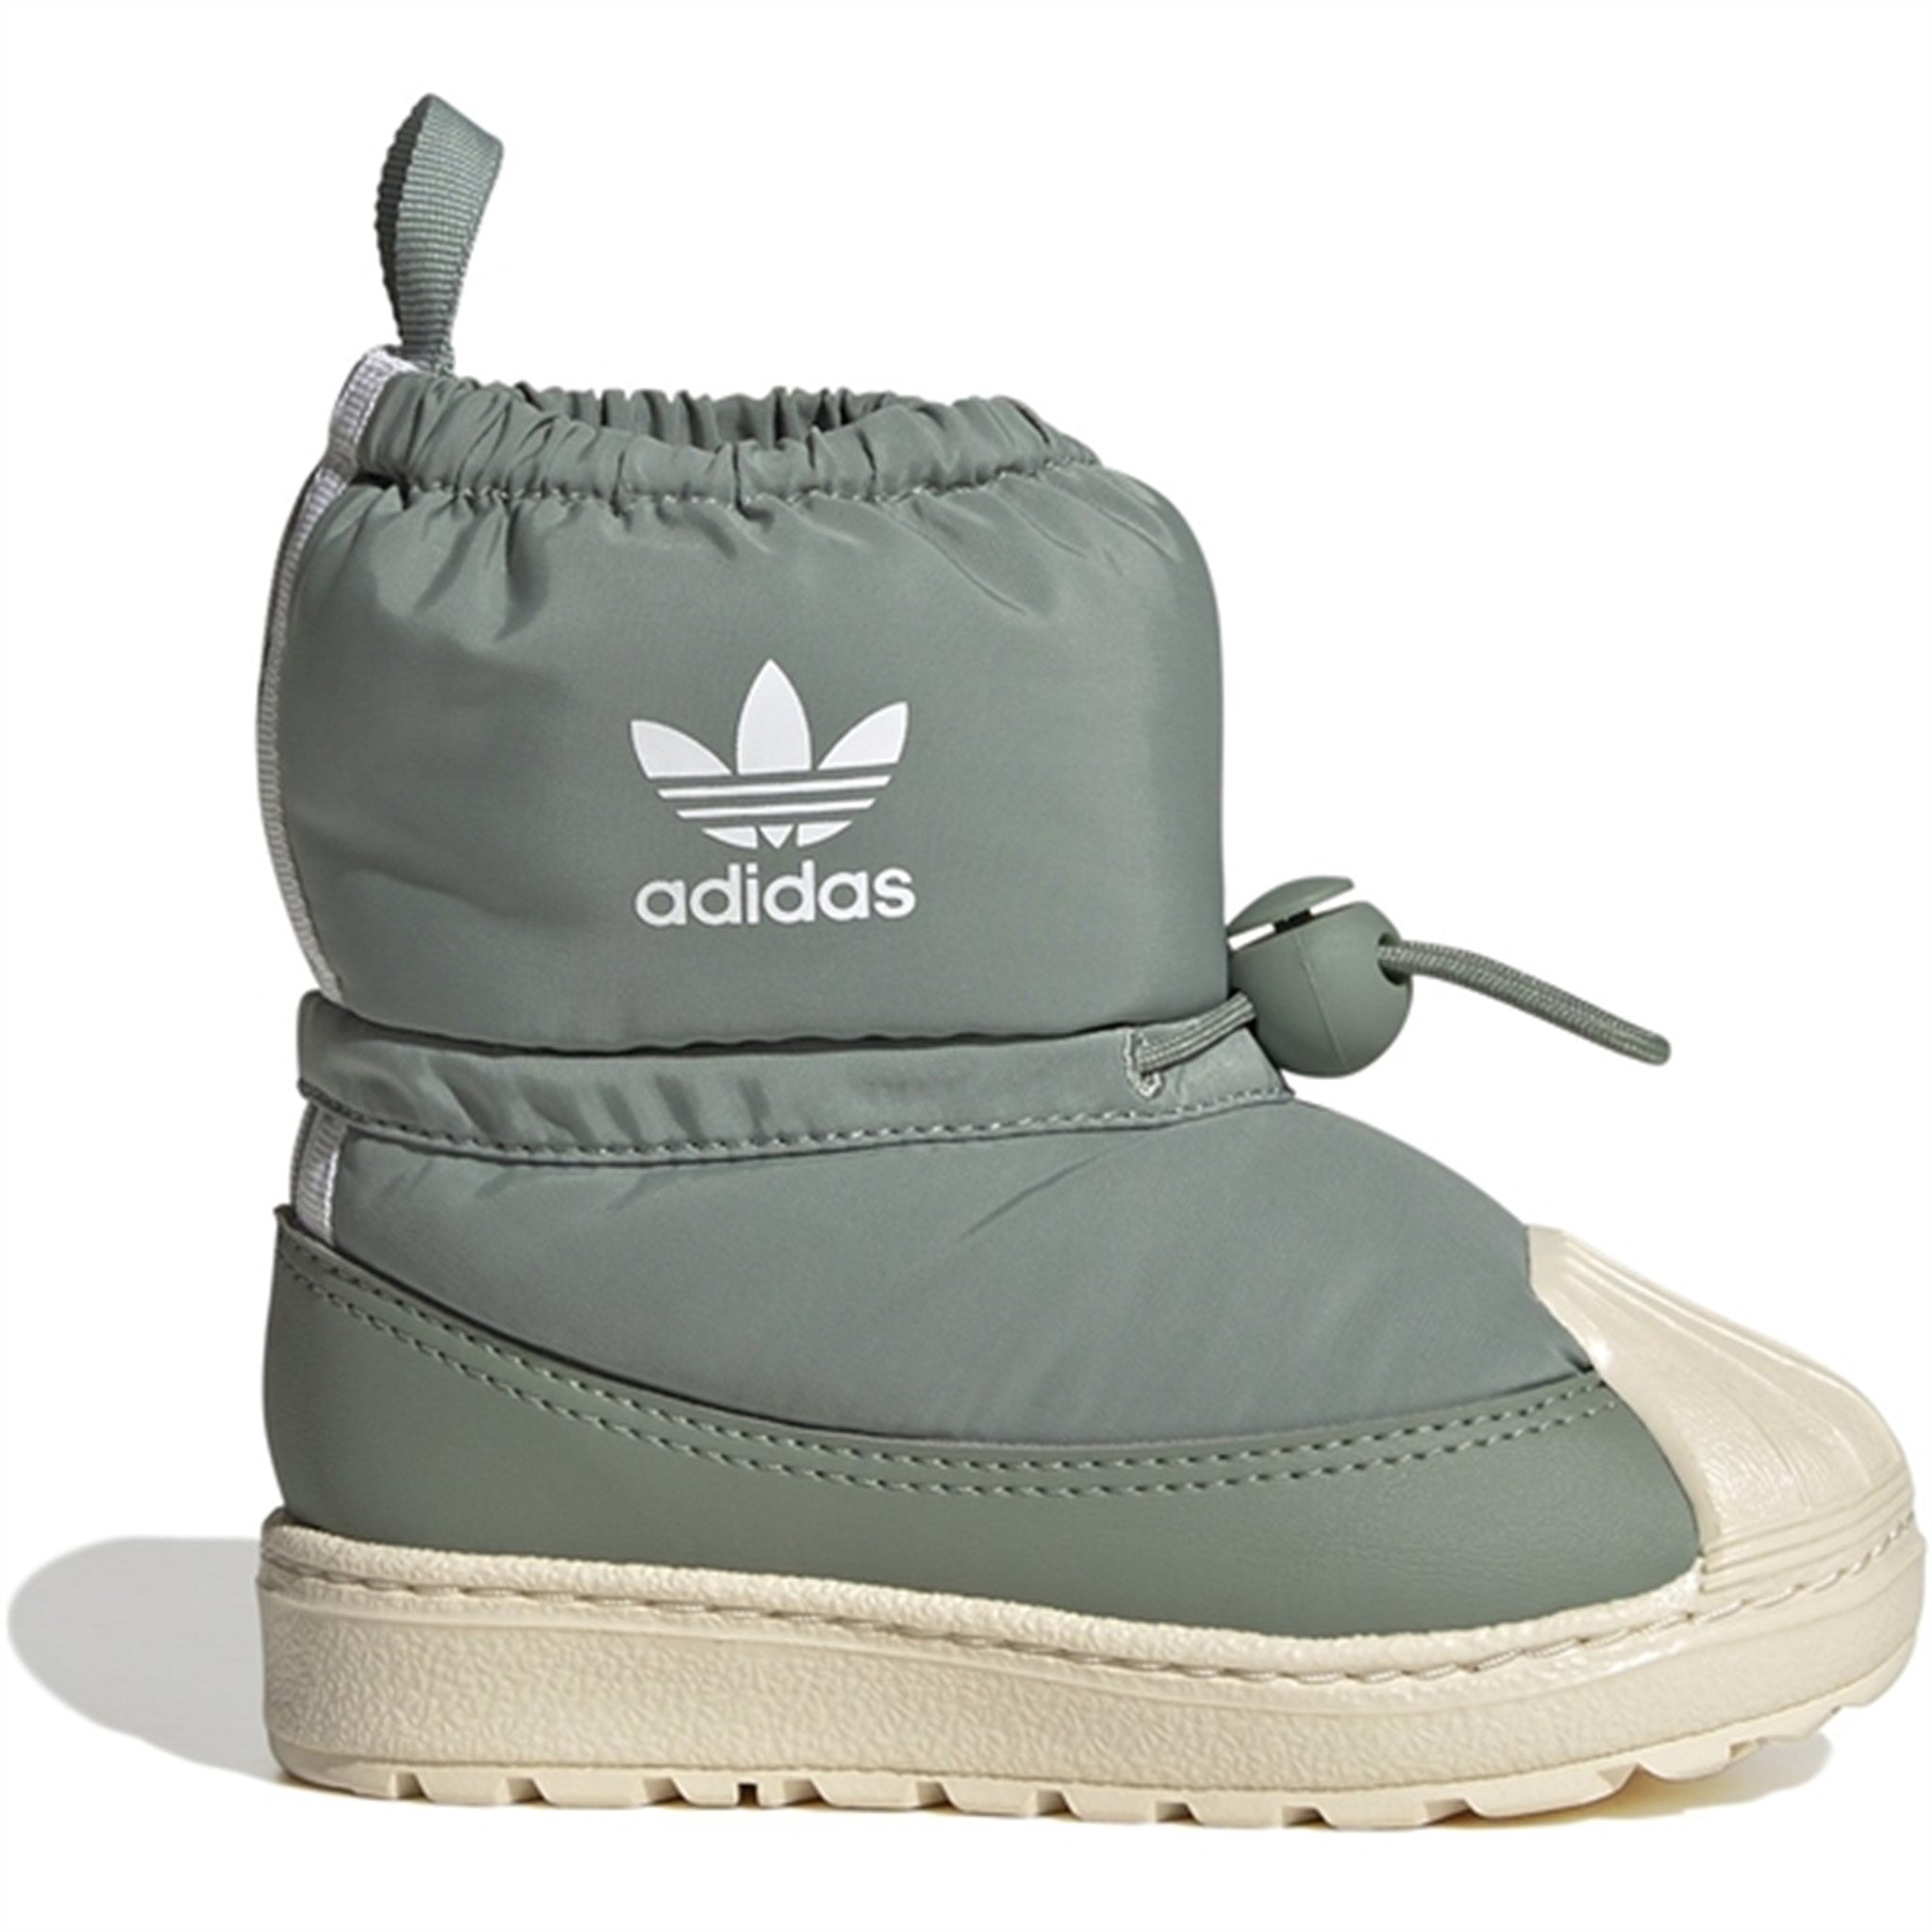 adidas Originals Superstar 360 Boots Green / White / Super Color